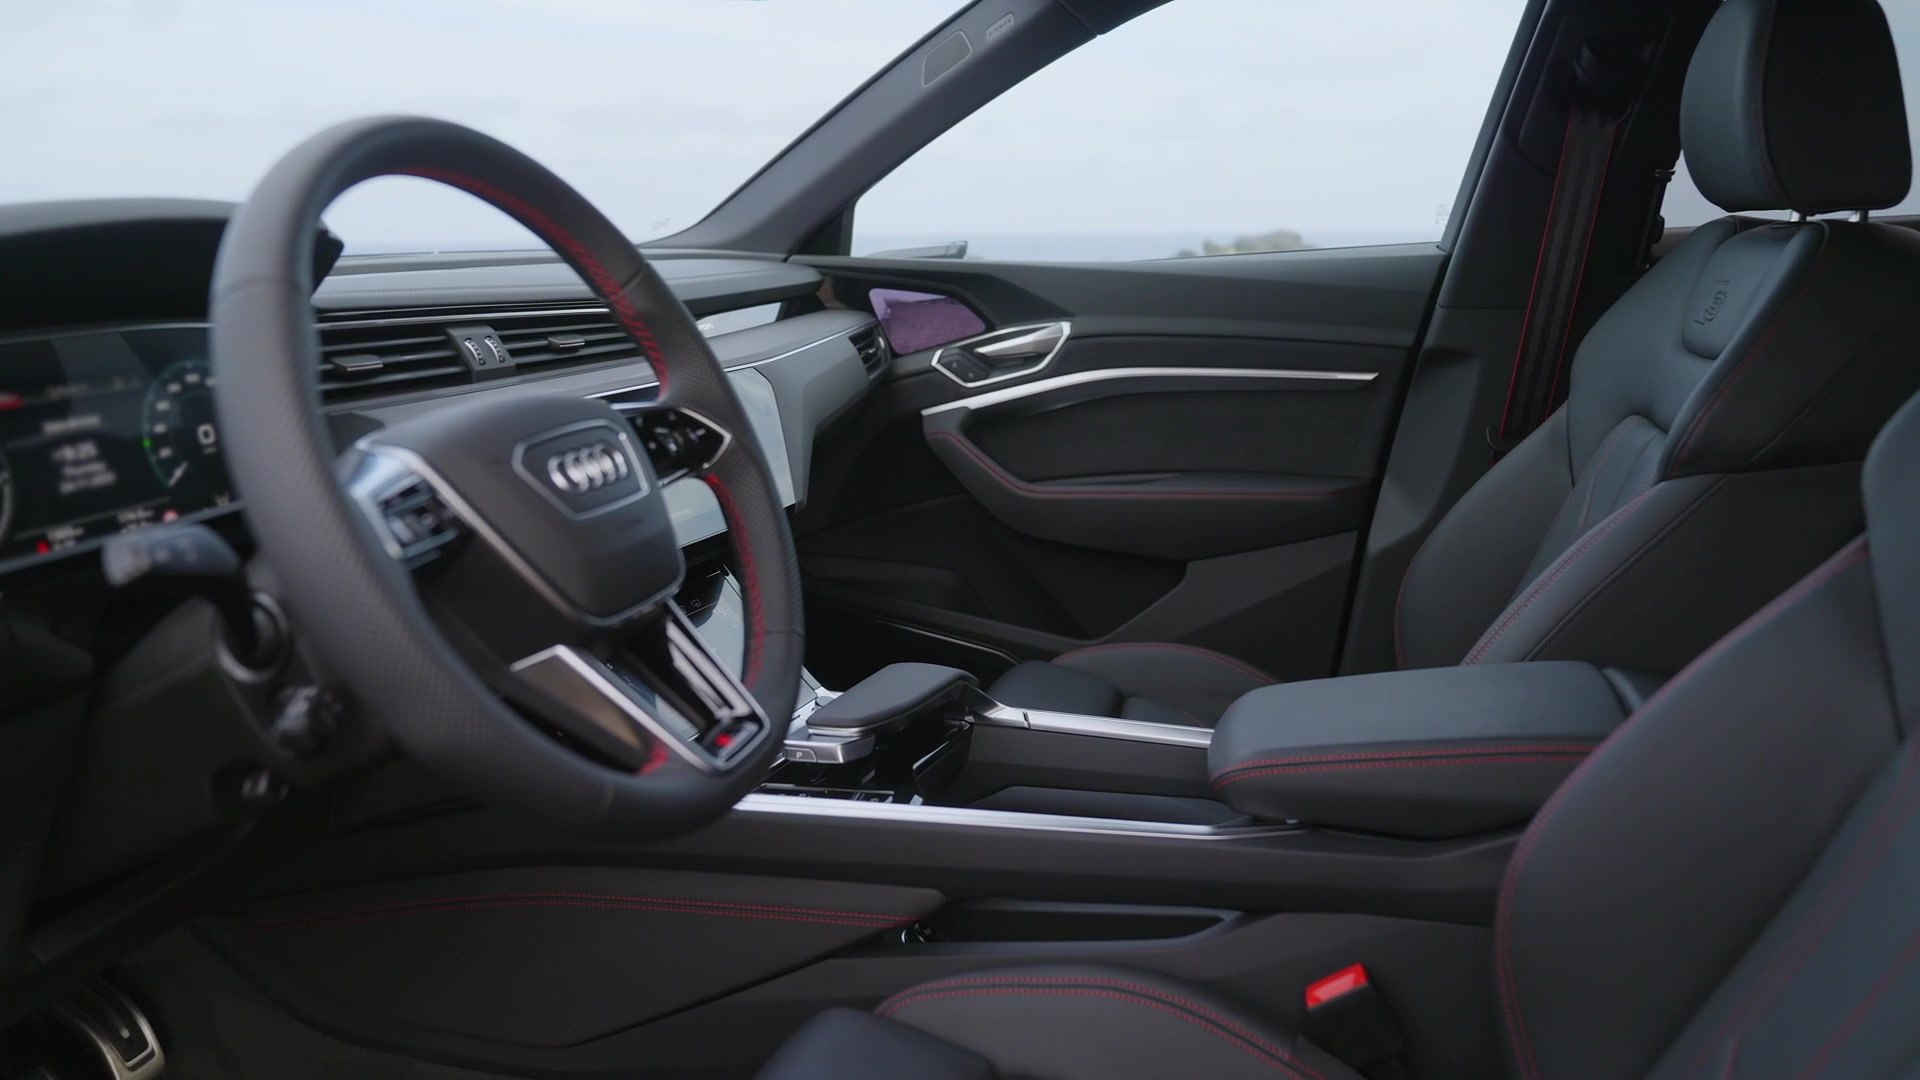 The new Audi Q8 e-tron Chronos Interior Design in Gray metallic